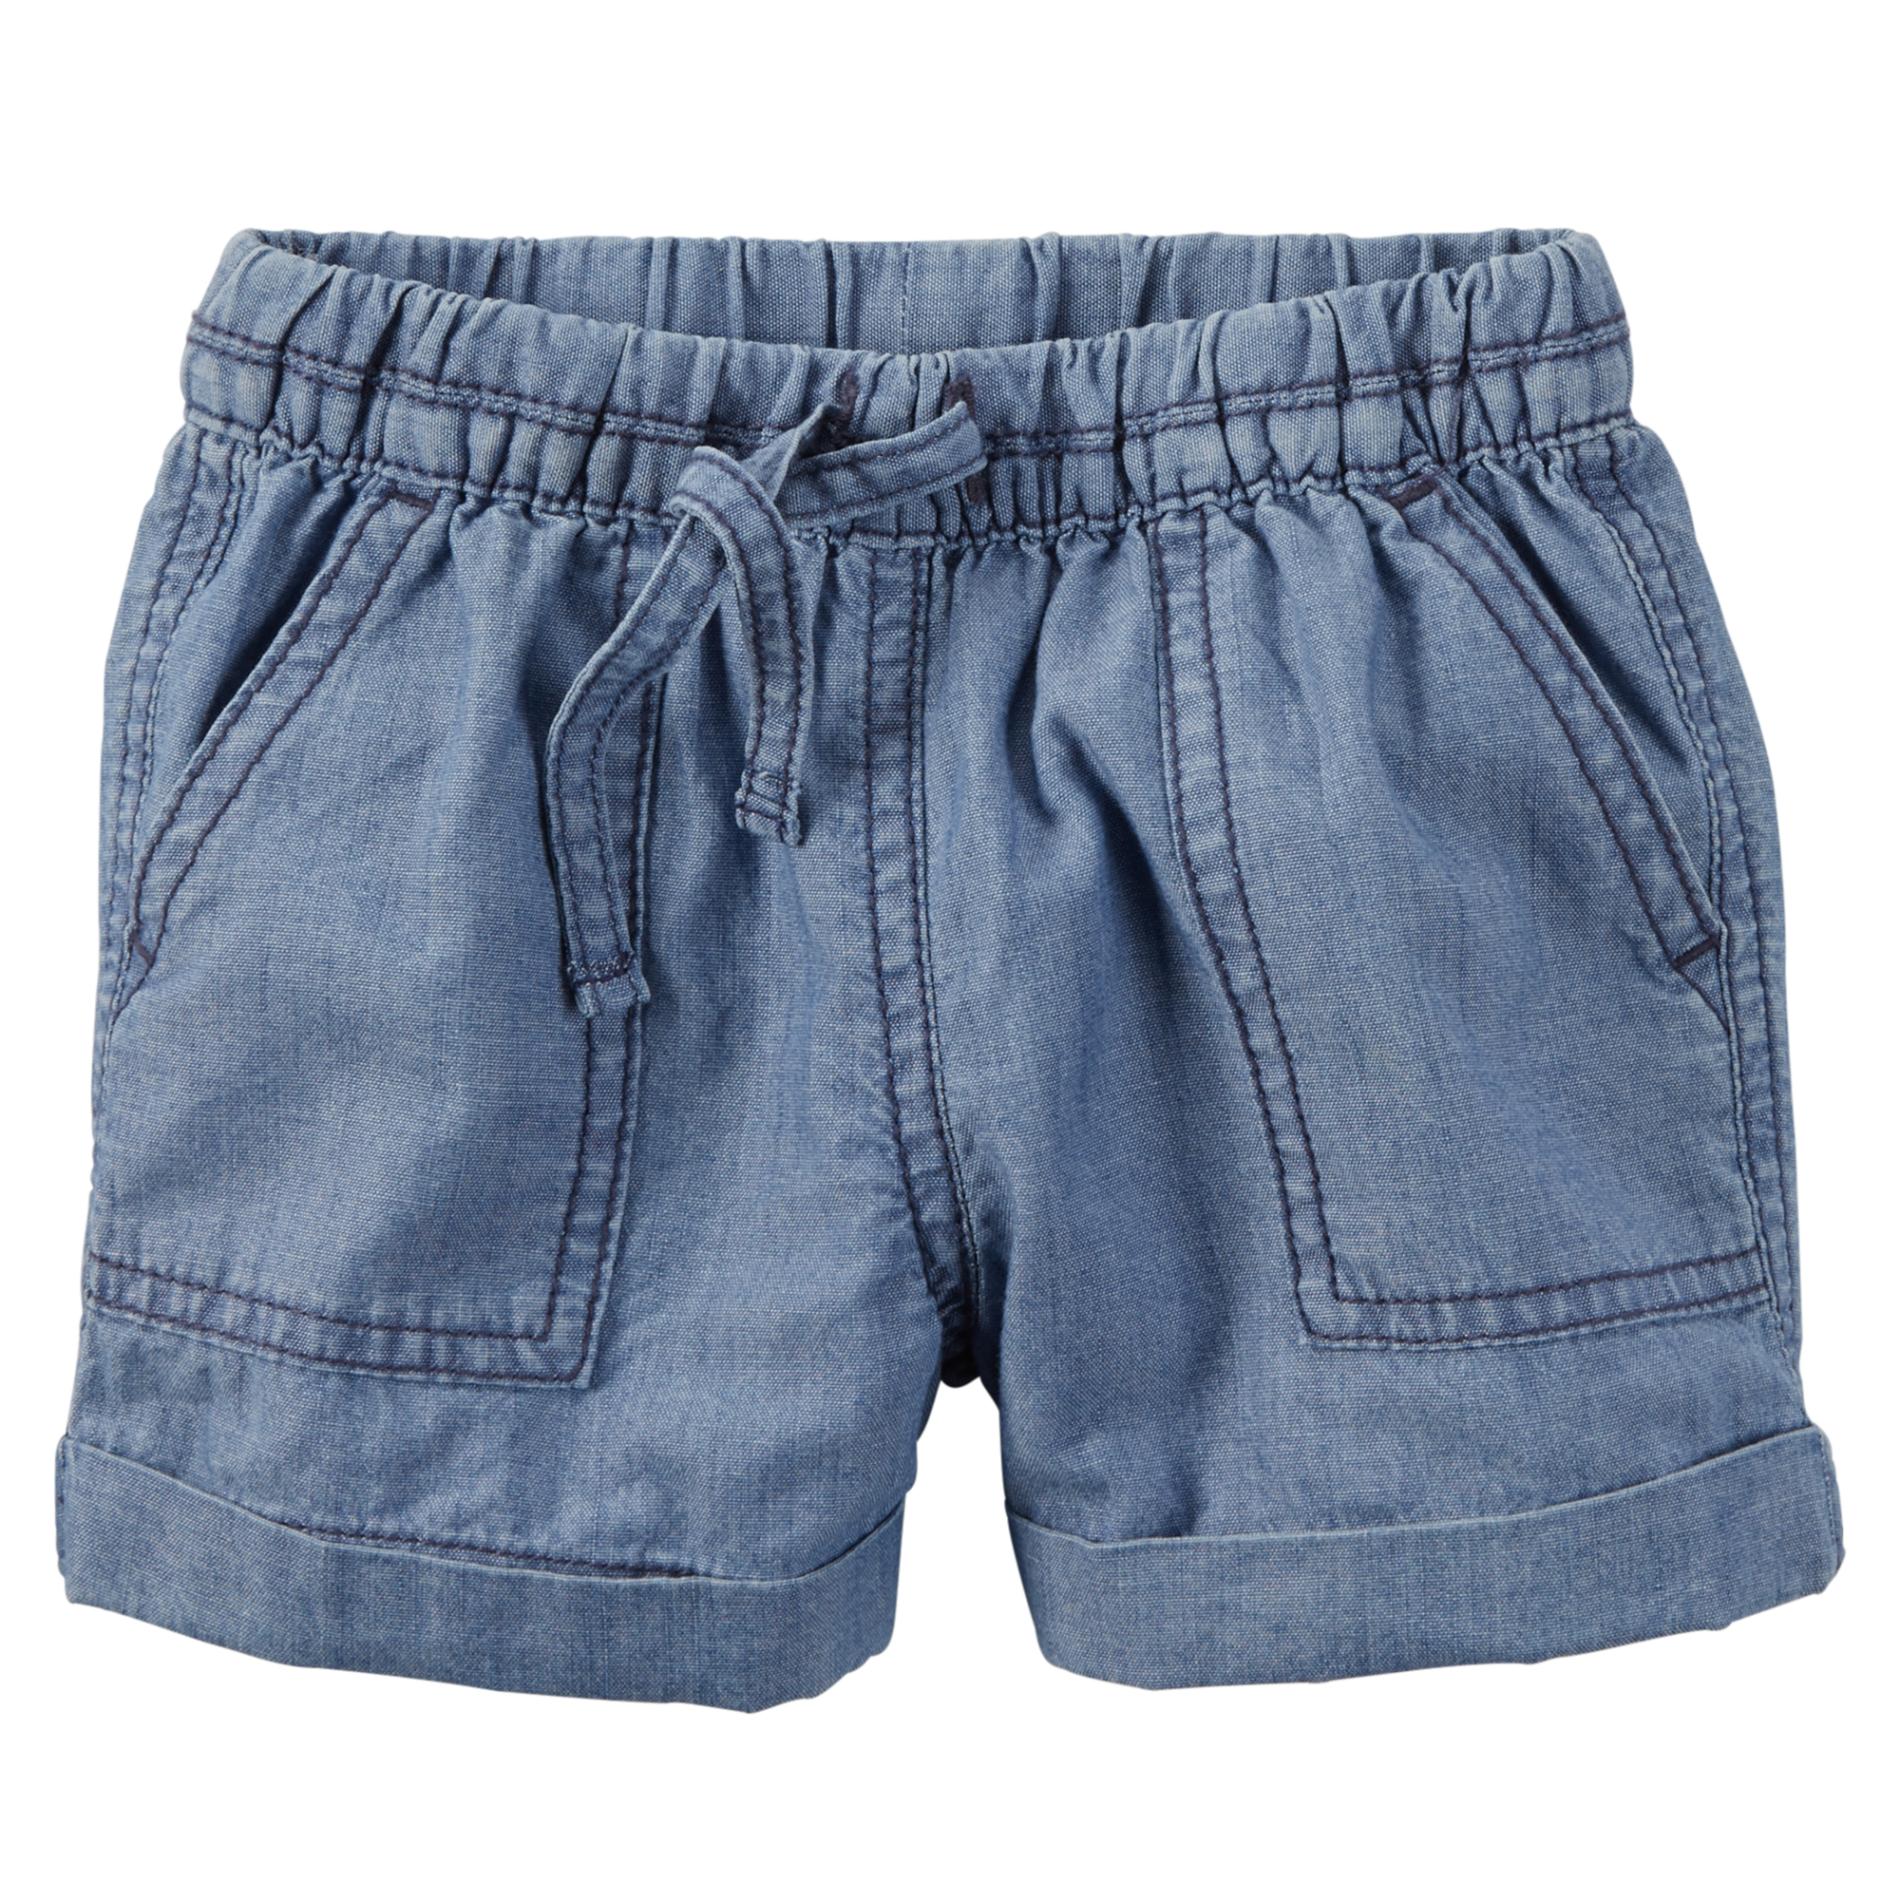 Carter's Girl's Shorts - Chambray